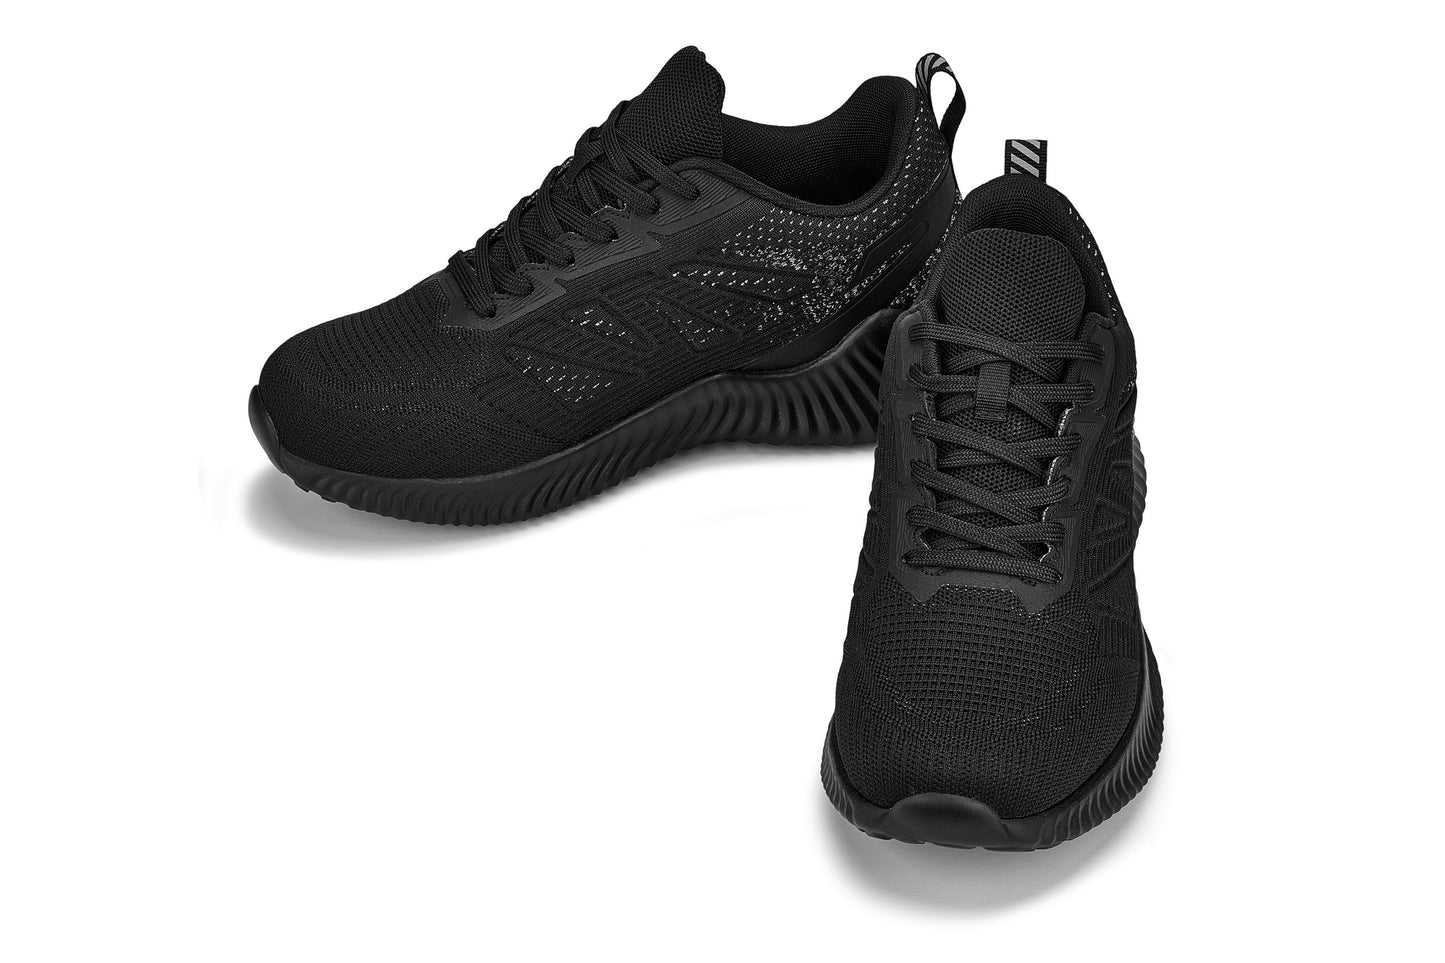 CALTO - Q220 - 2.6 بوصة أطول (أسود/رمادي ثلجي) - أحذية رياضية خفيفة الوزن